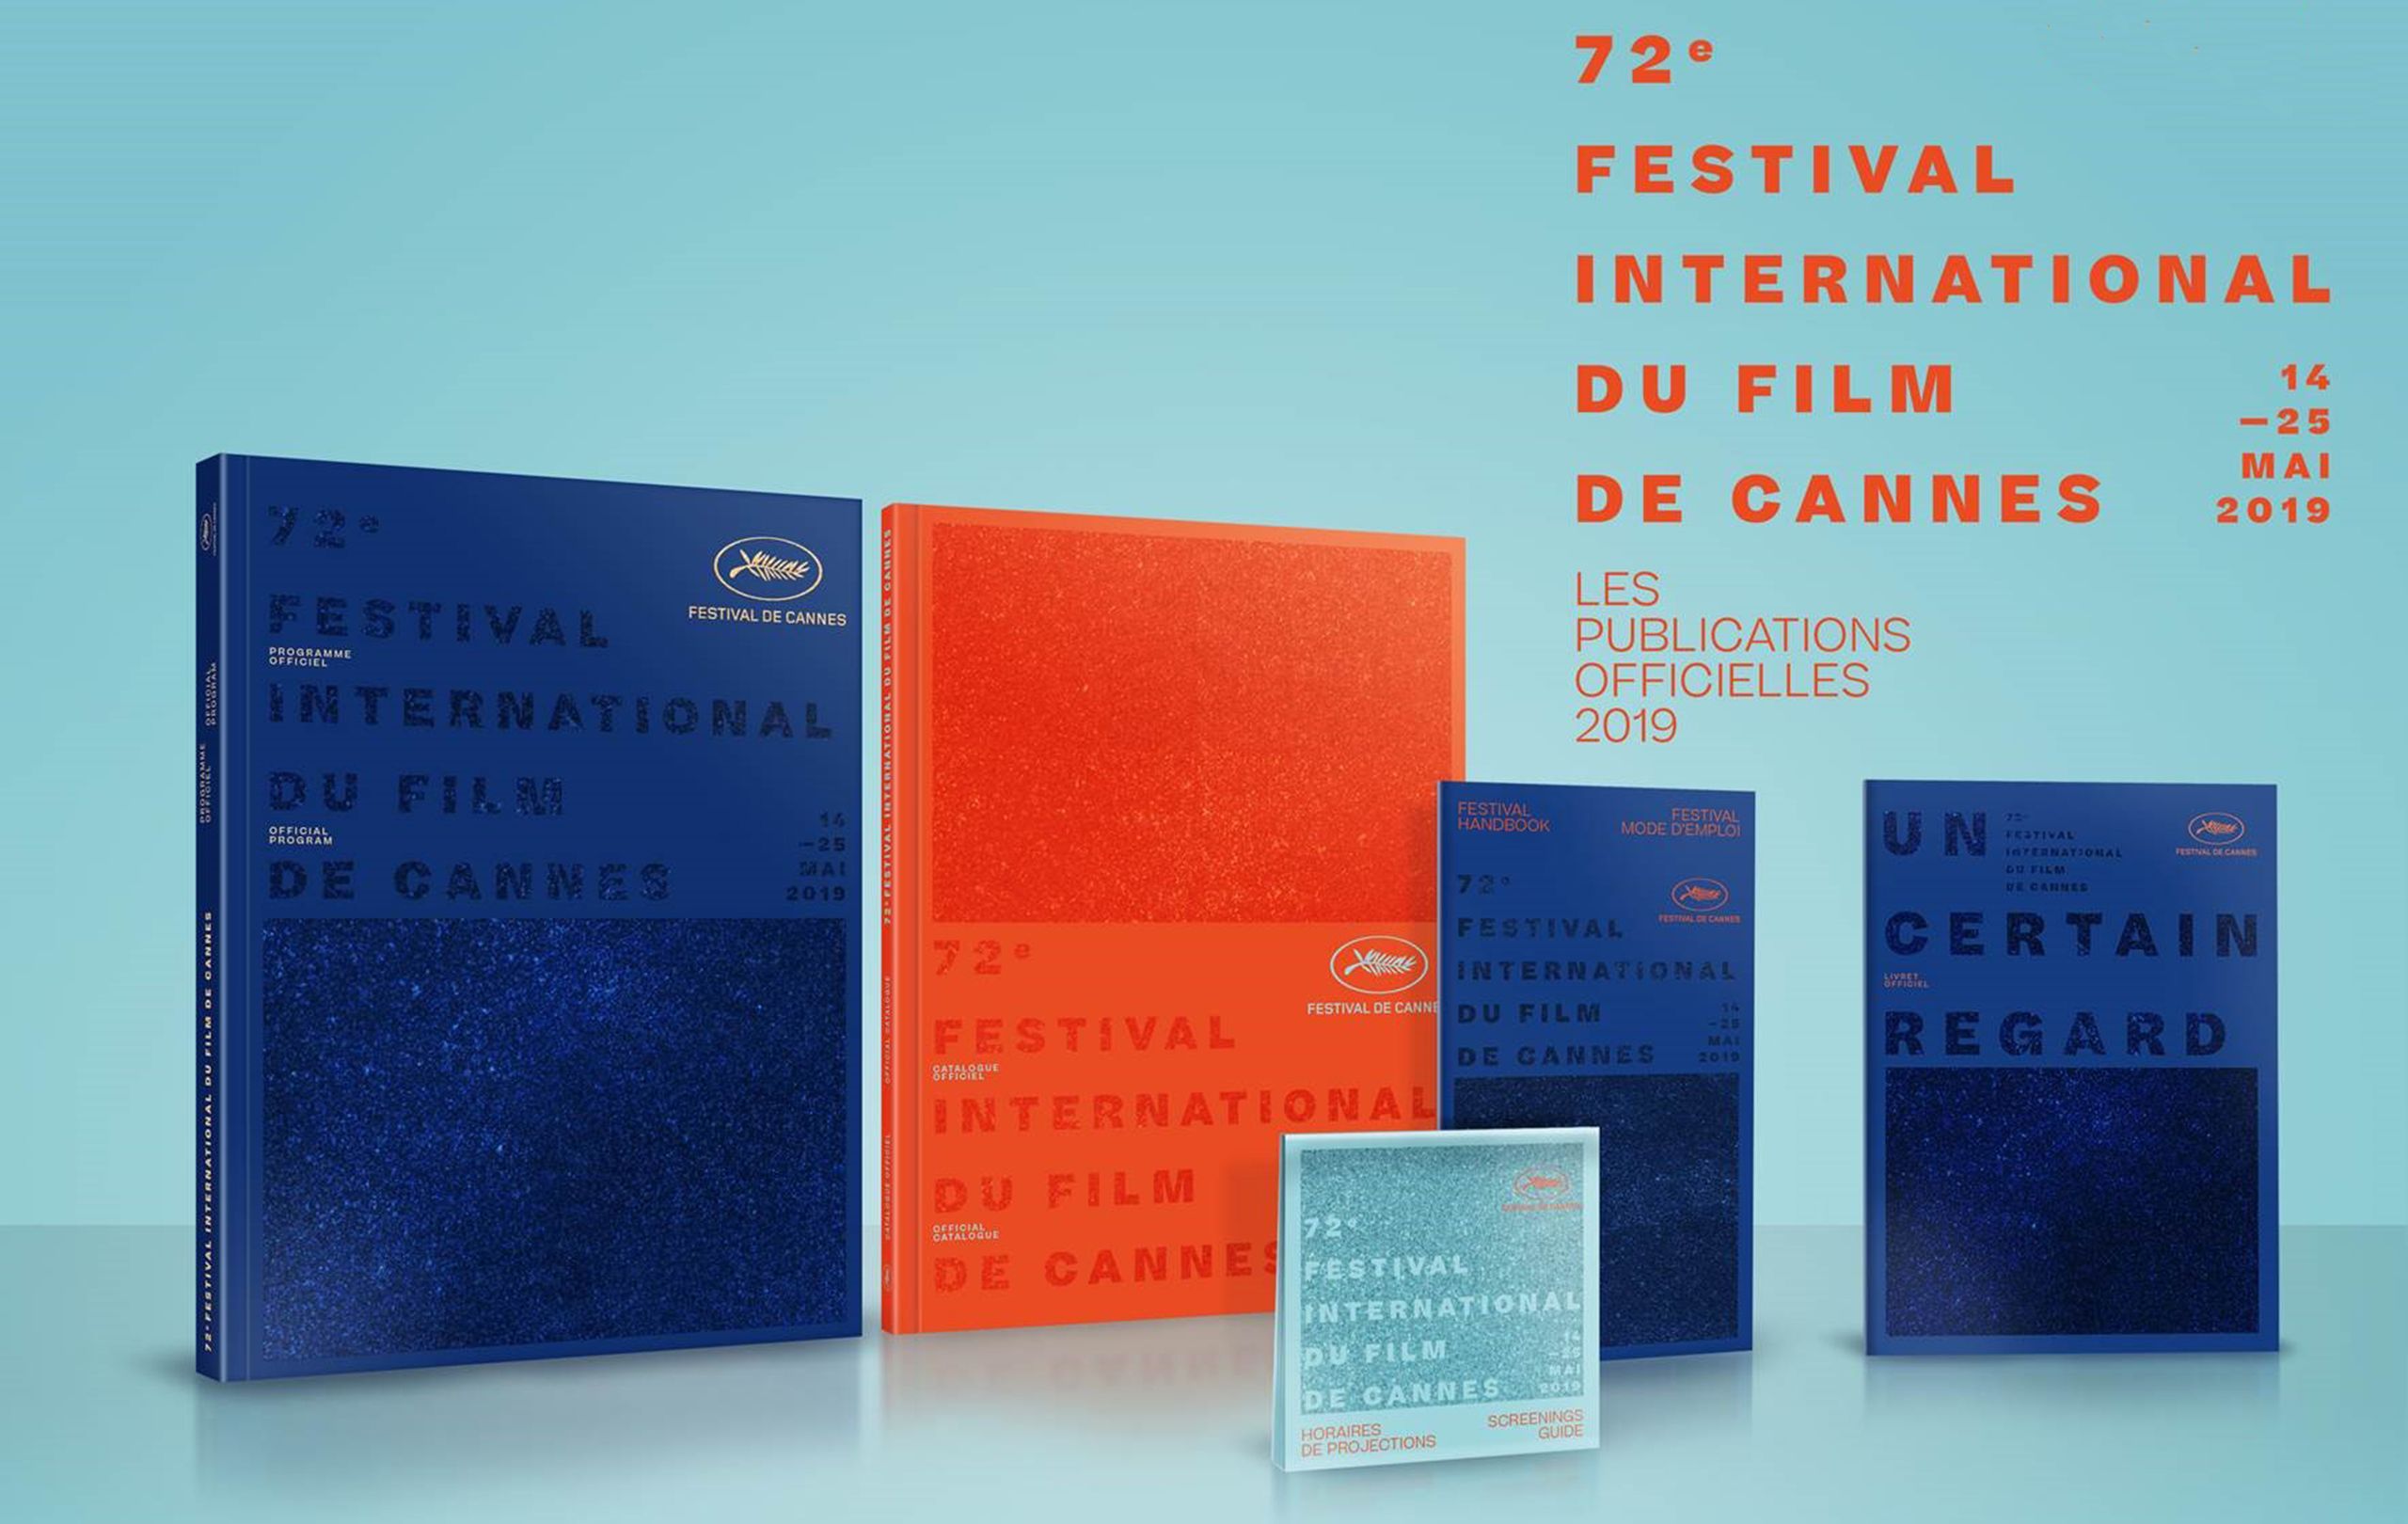 The Screenings Guide 2019 - Festival de Cannes